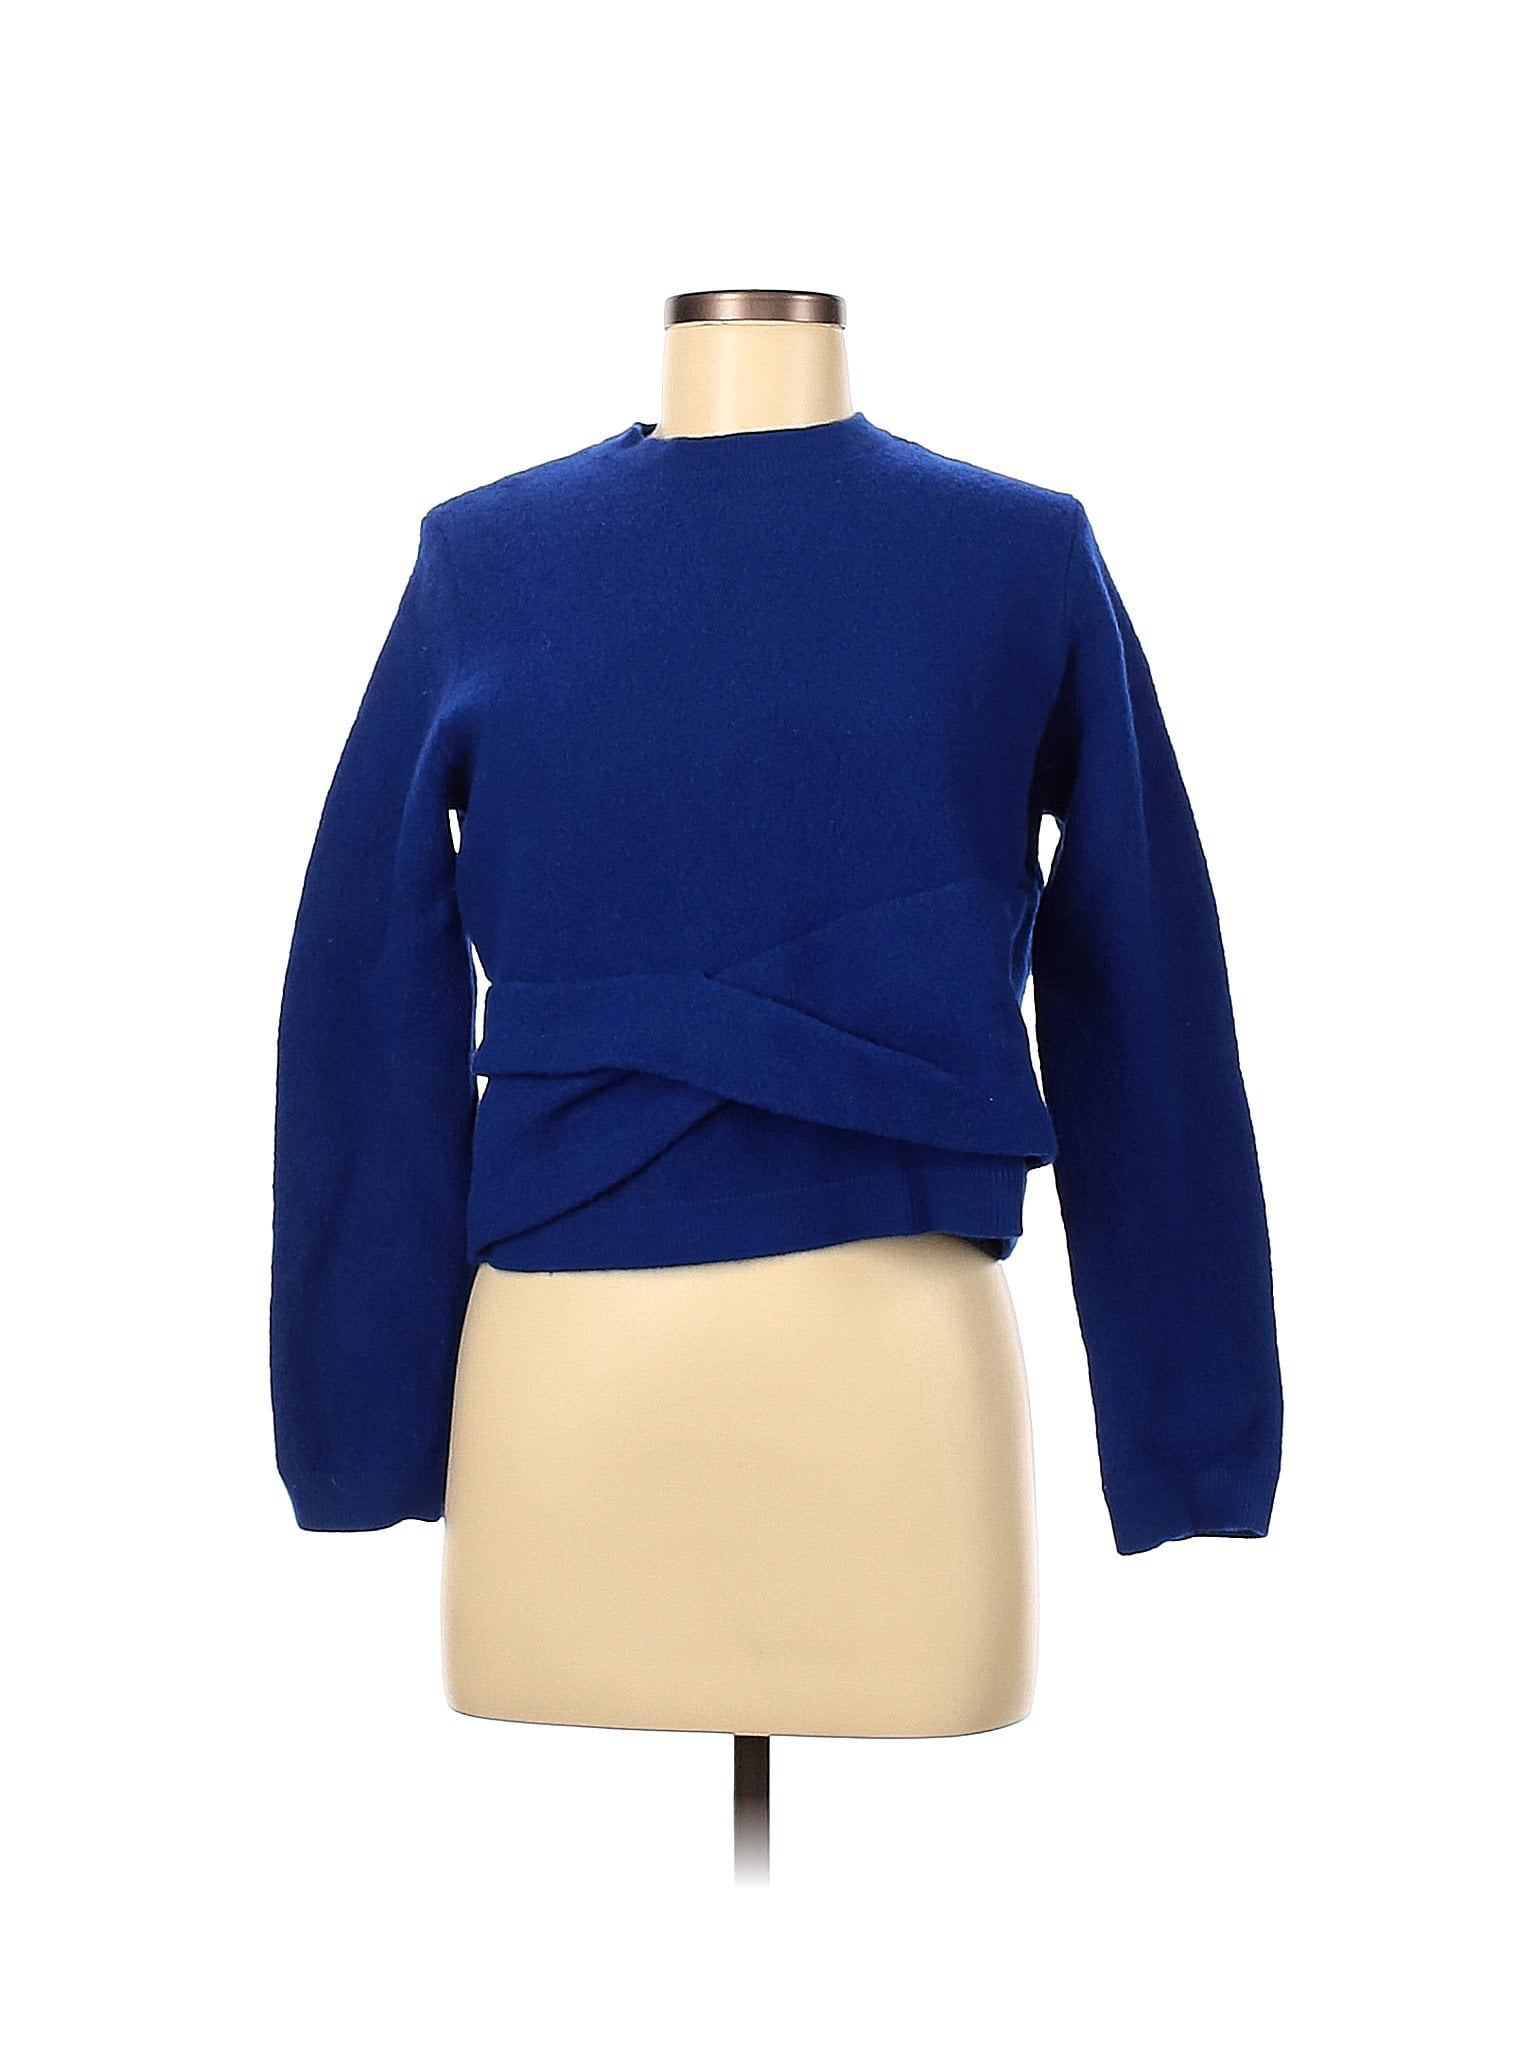 Buy Pre-Own Cos Dame størrelse Uld Pullover Sweater Online at Lowest Price in Ubuy Denmark.